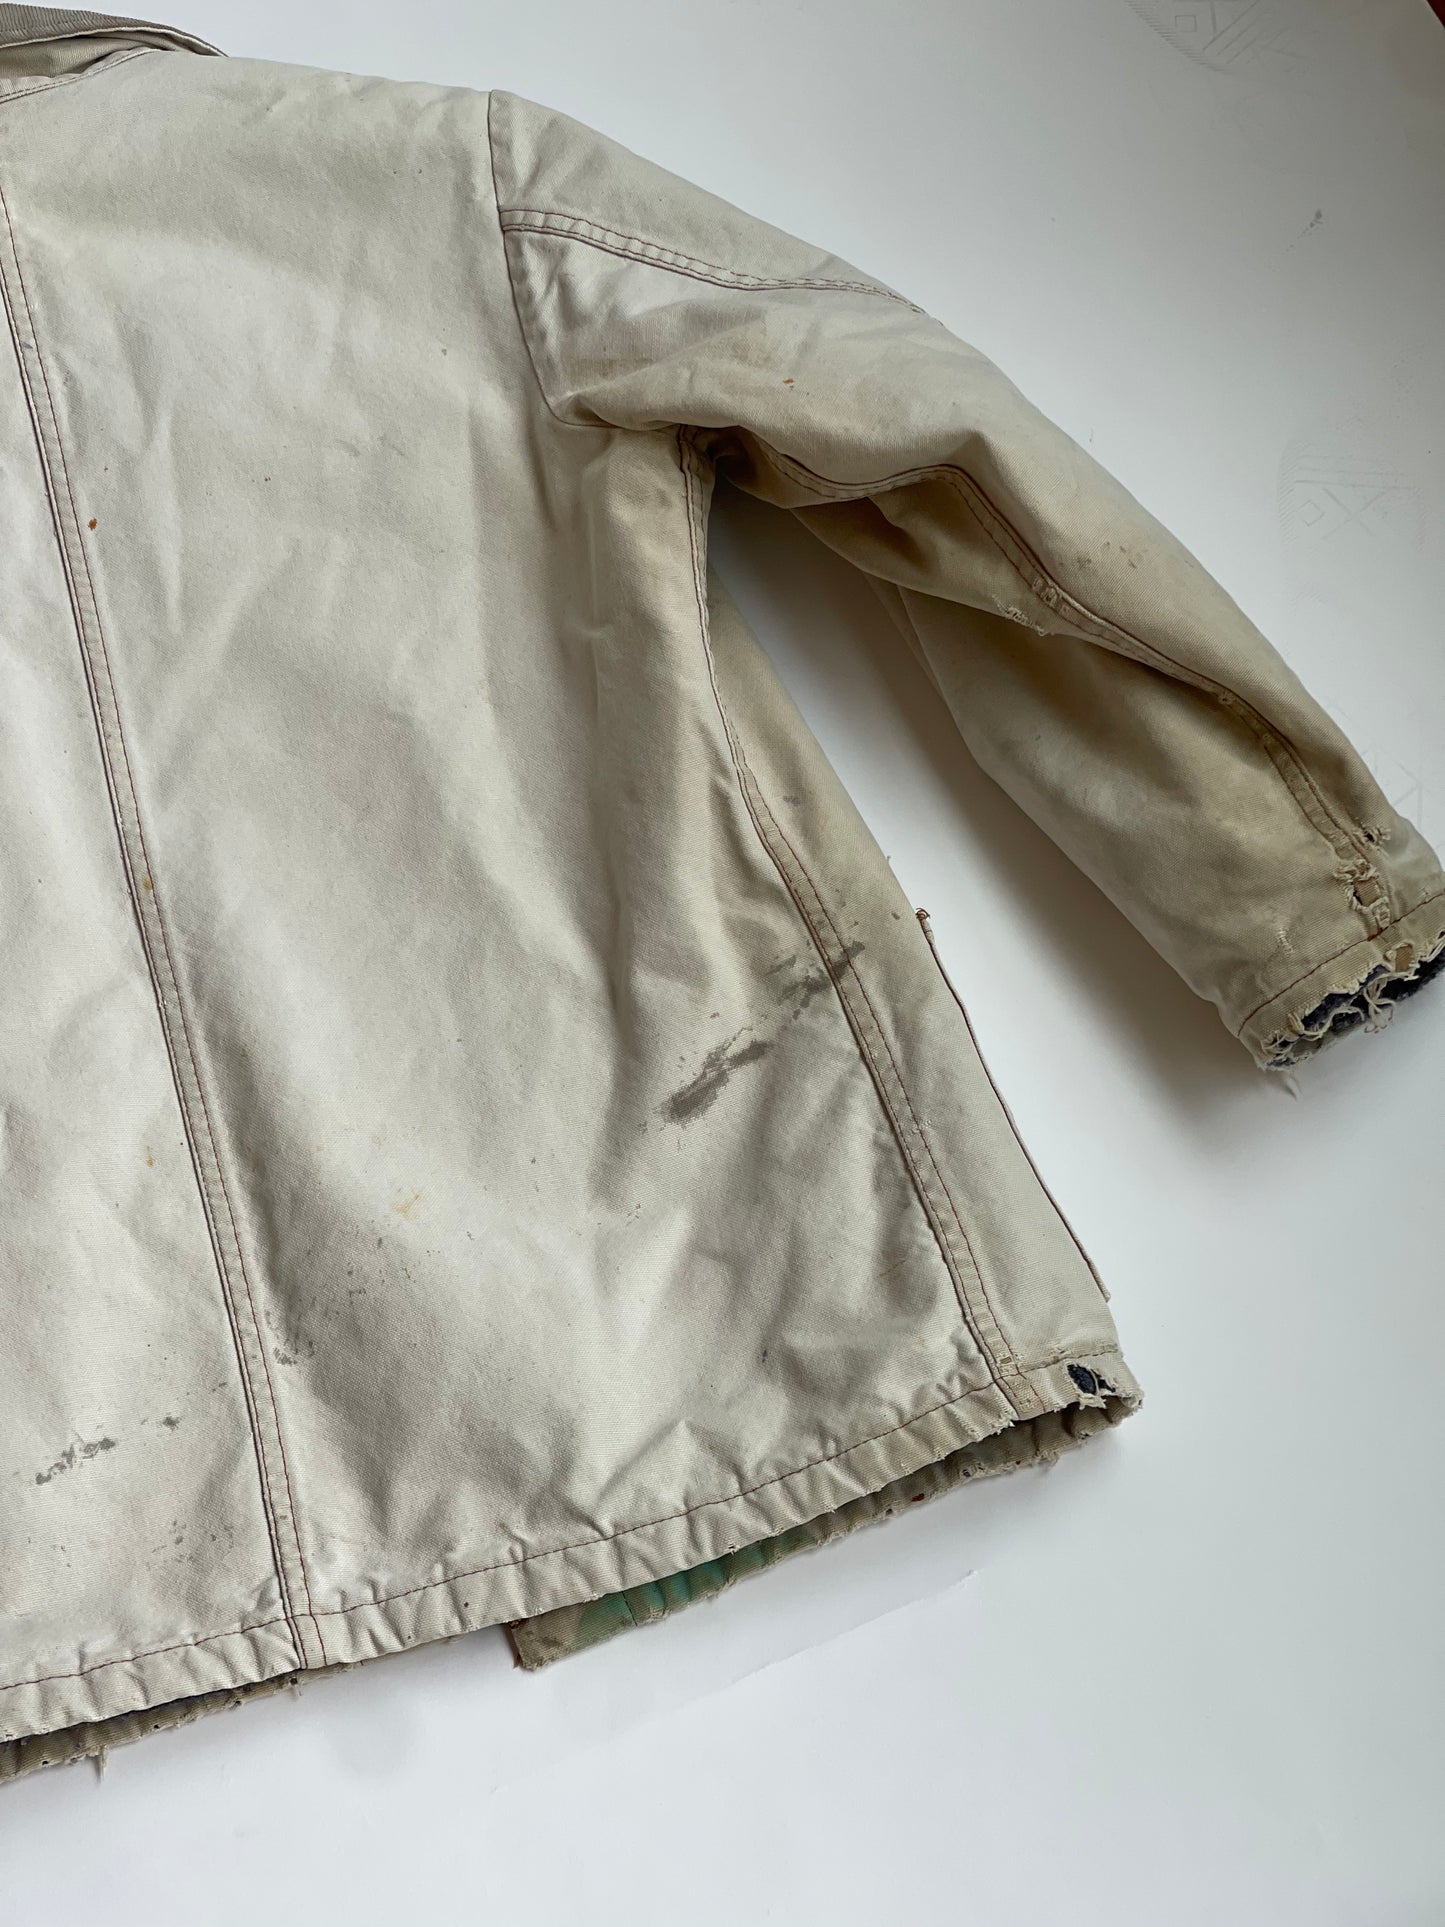 Vintage Dickie's Lined Chore Jacket - M